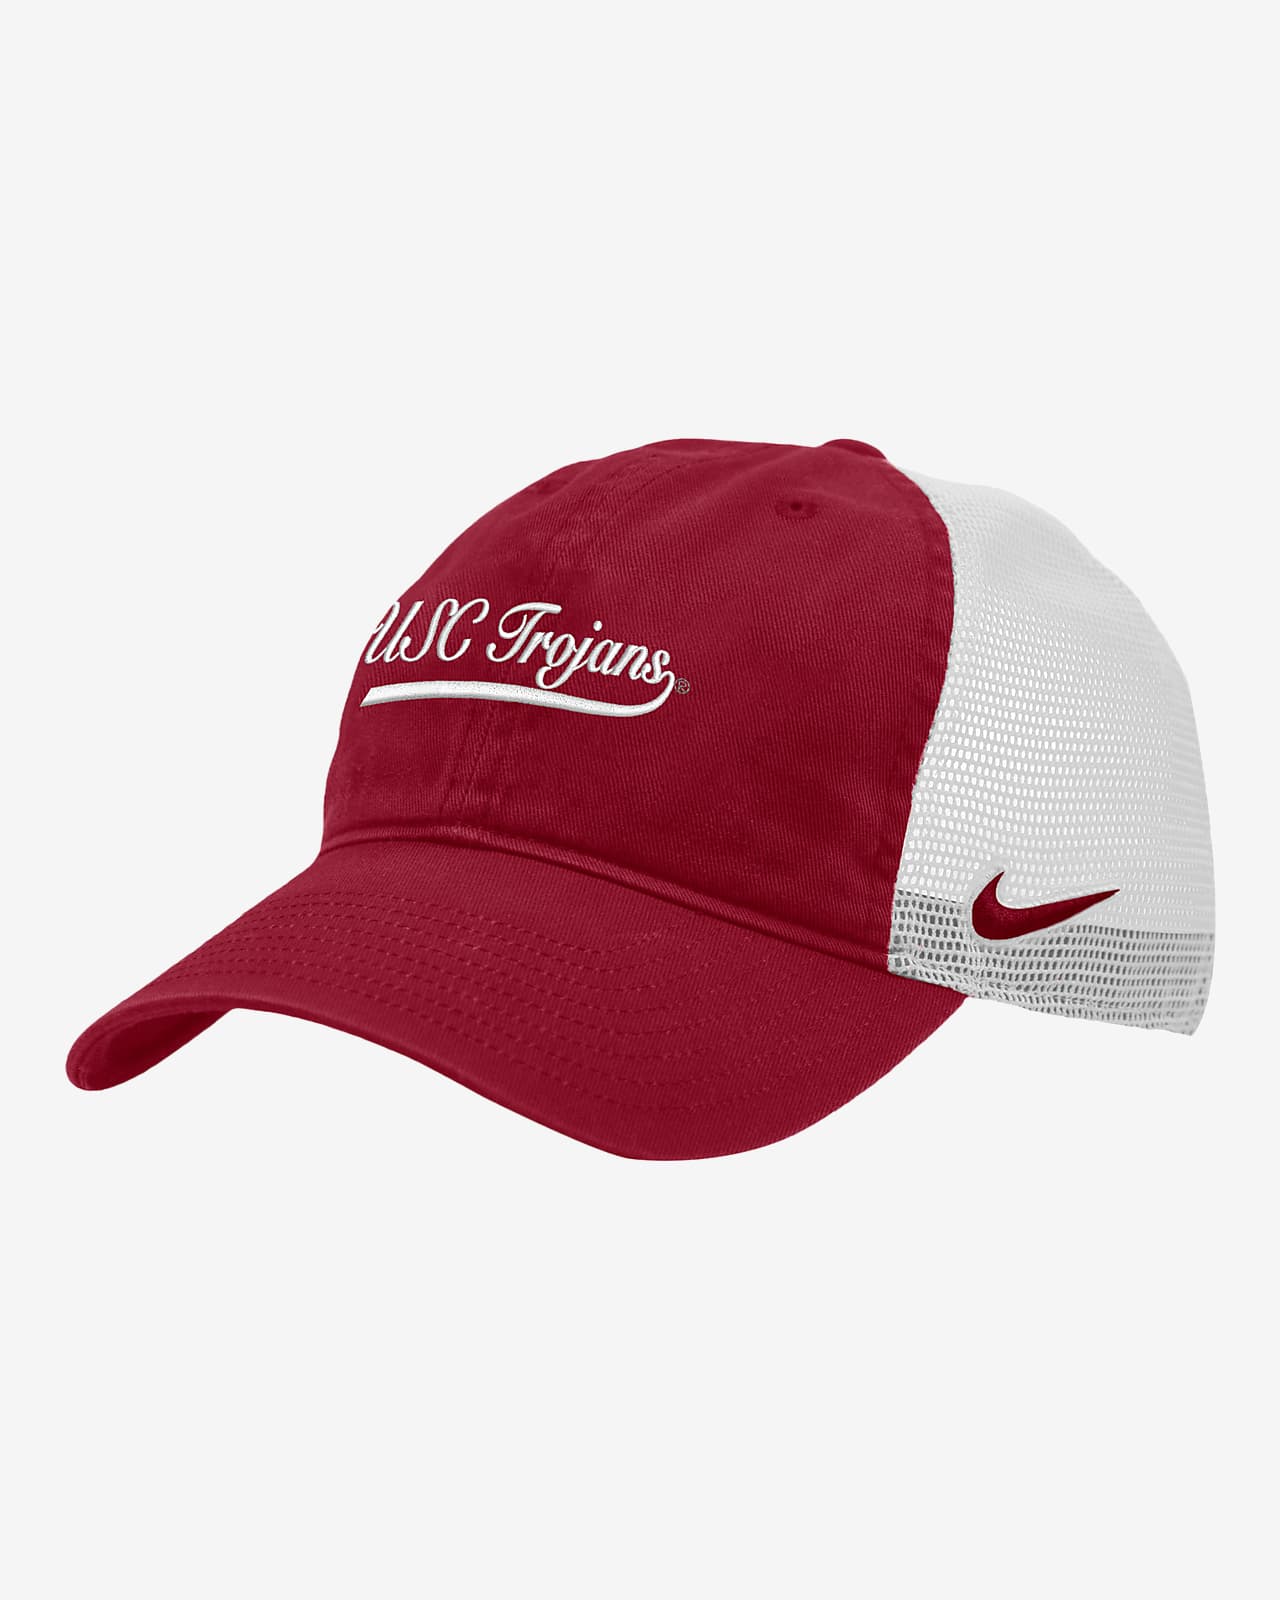 USC Heritage86 Nike College Trucker Hat